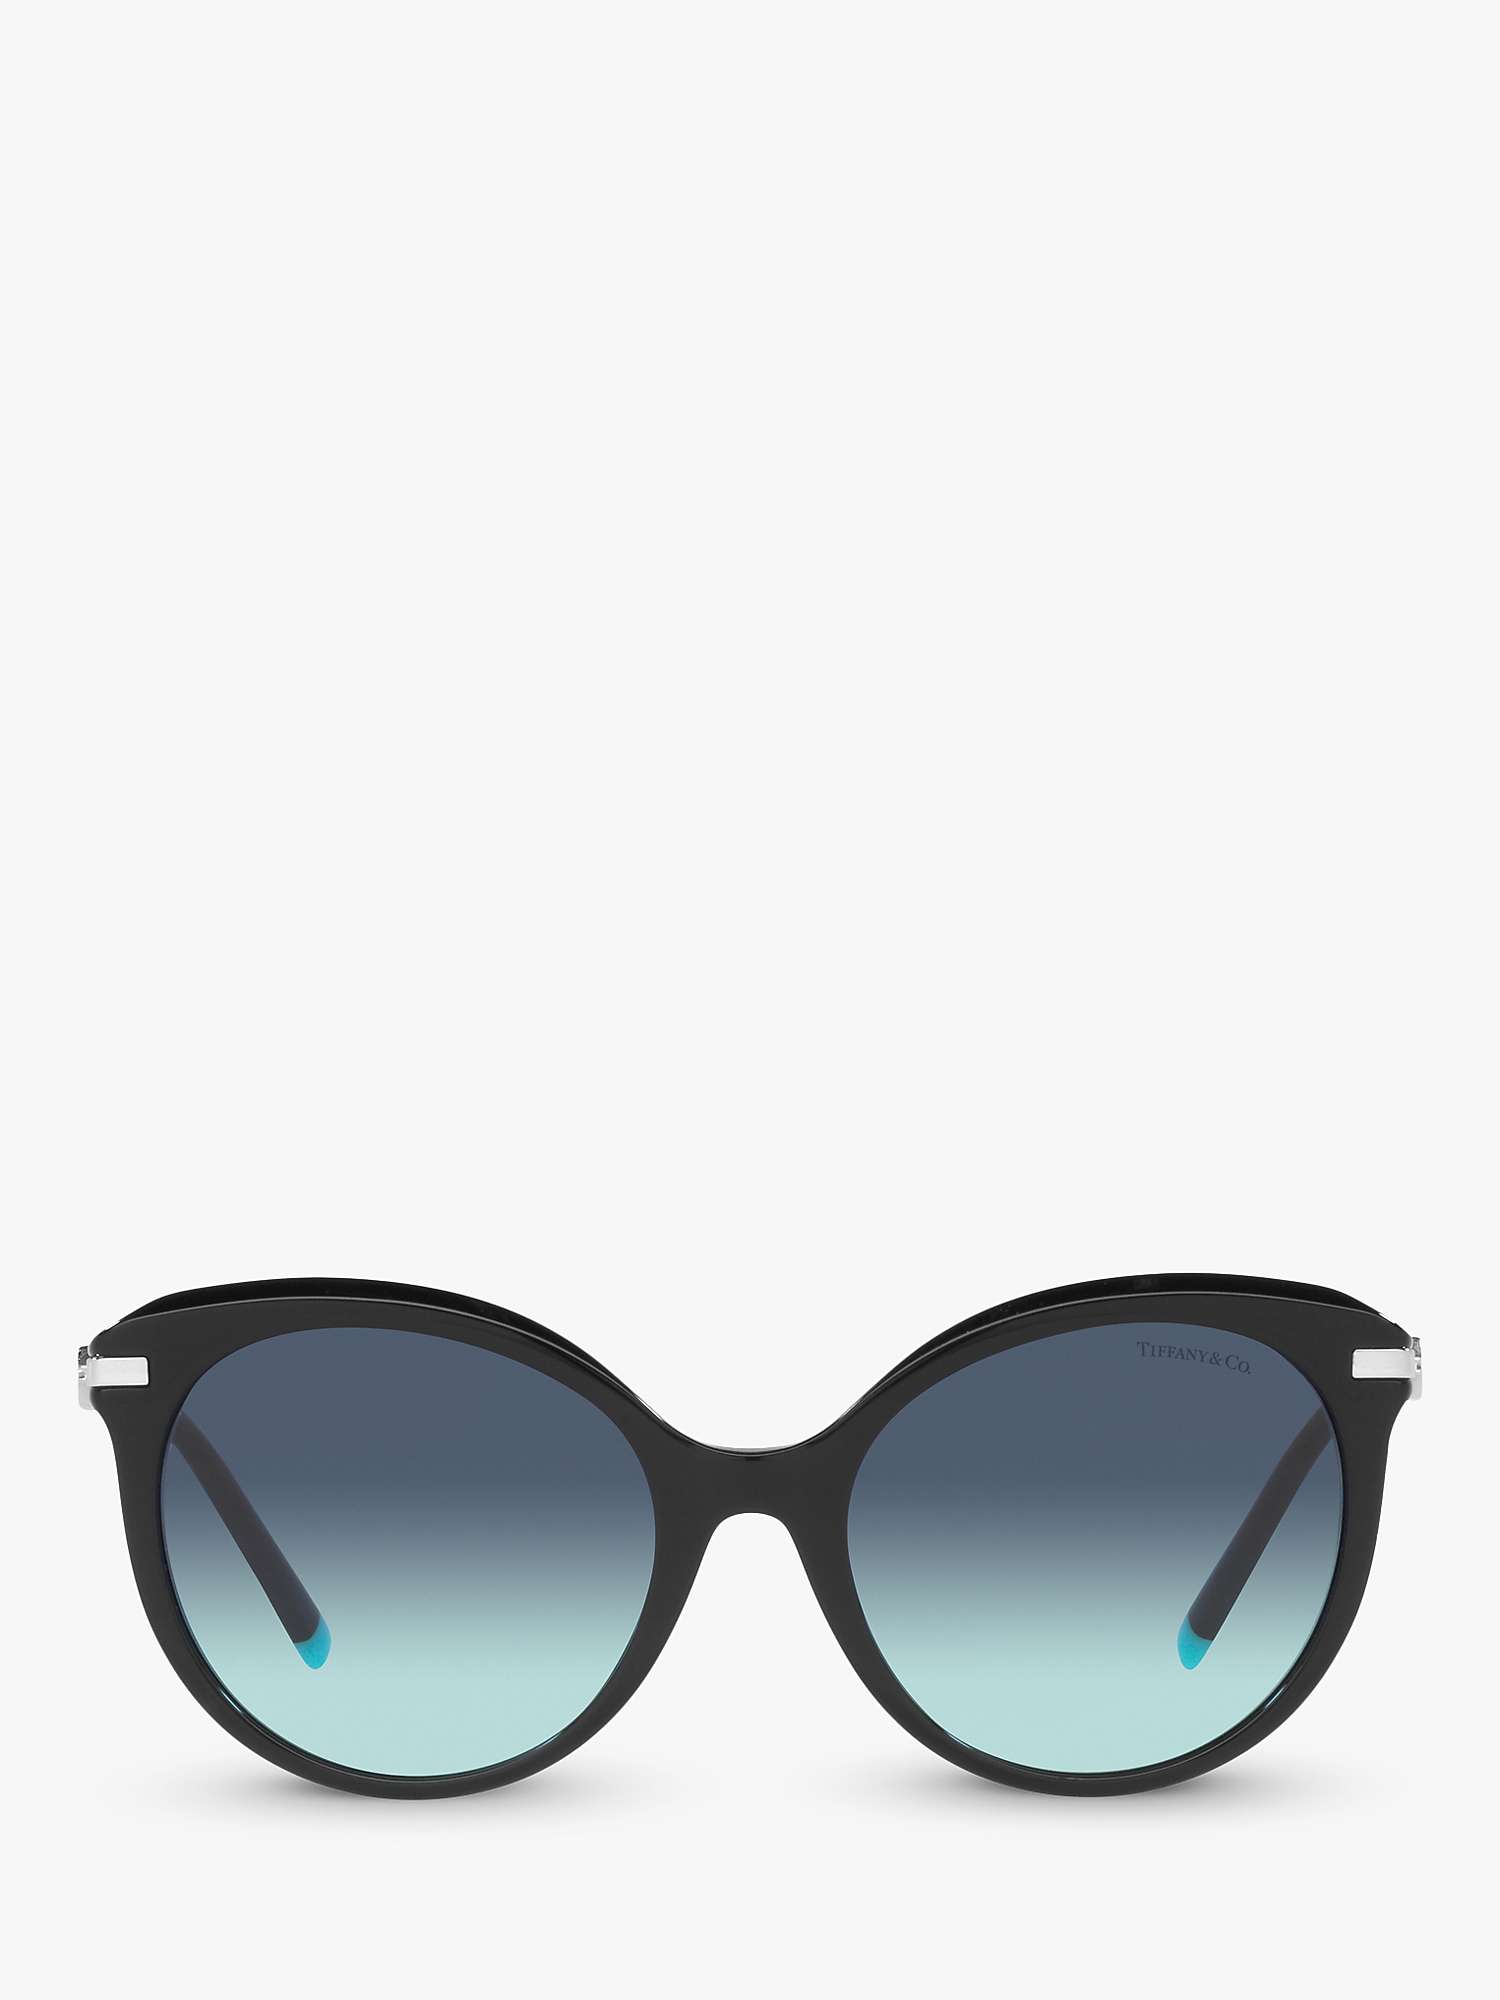 Buy Tiffany & Co TF4189B Women's Cat's Eye Sunglasses Online at johnlewis.com